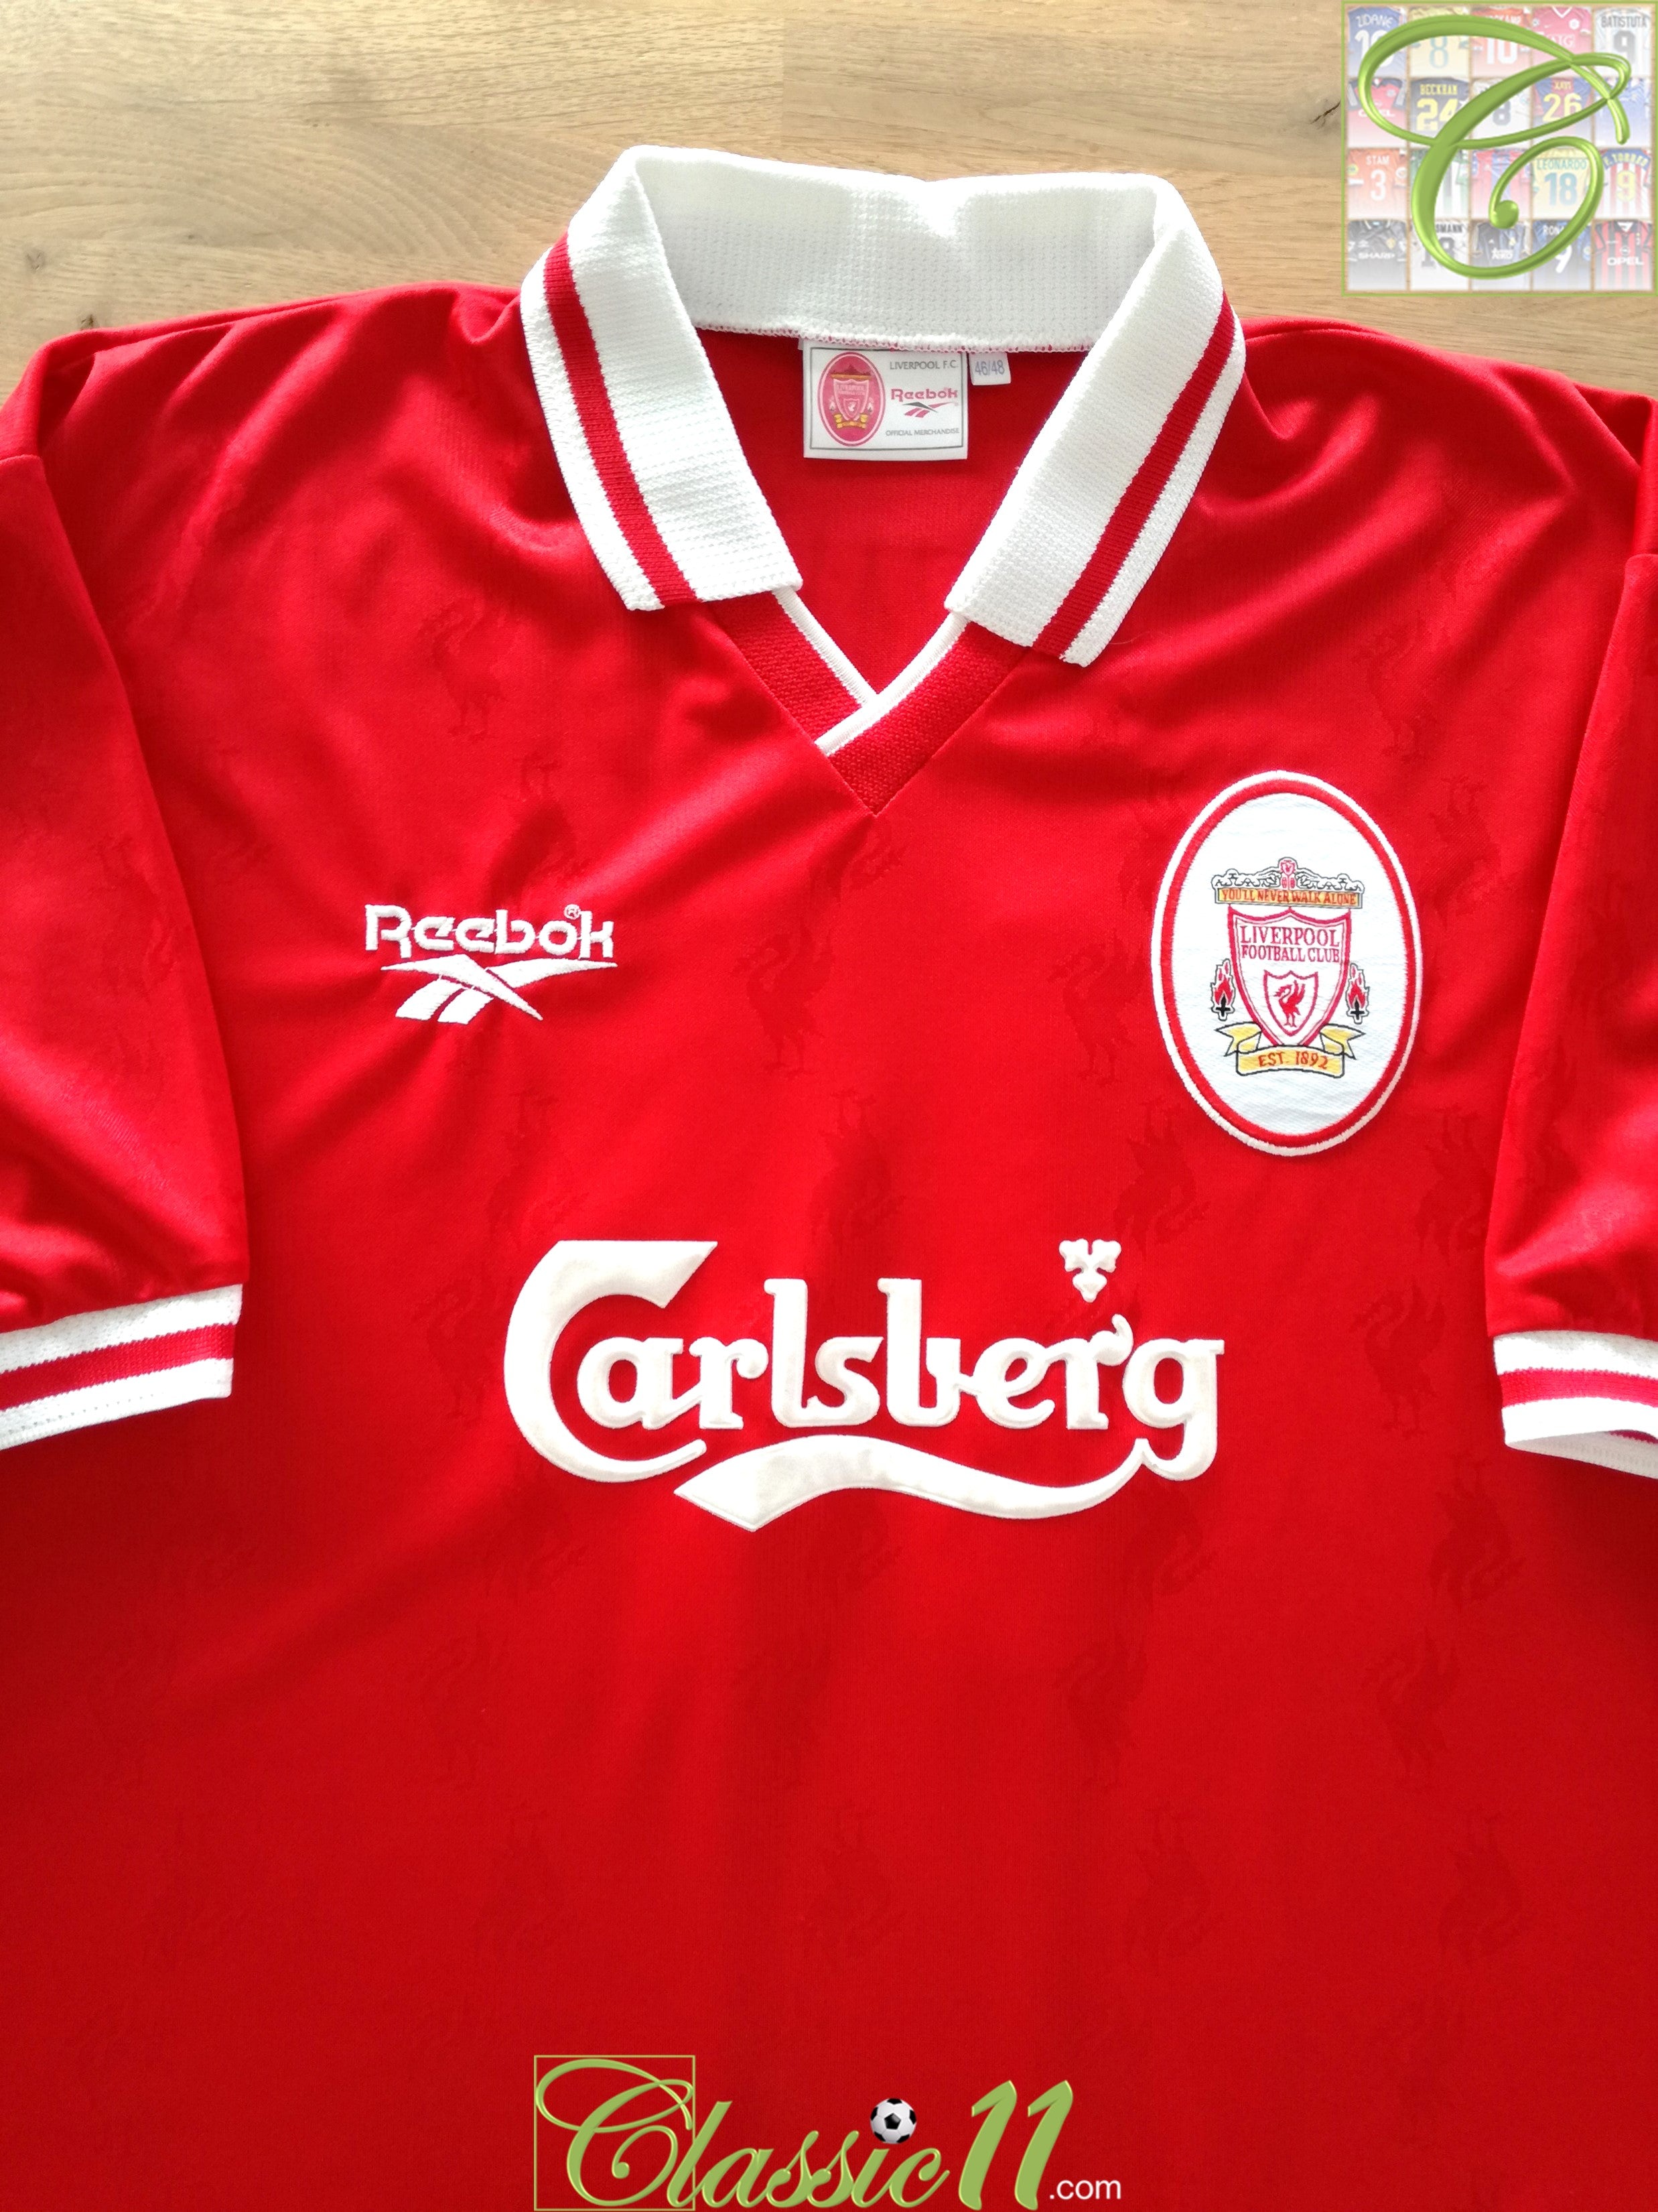 triple Festival arrebatar 1996/97 Liverpool Home Football Shirt / Vintage Reebok Soccer Jersey |  Classic Football Shirts